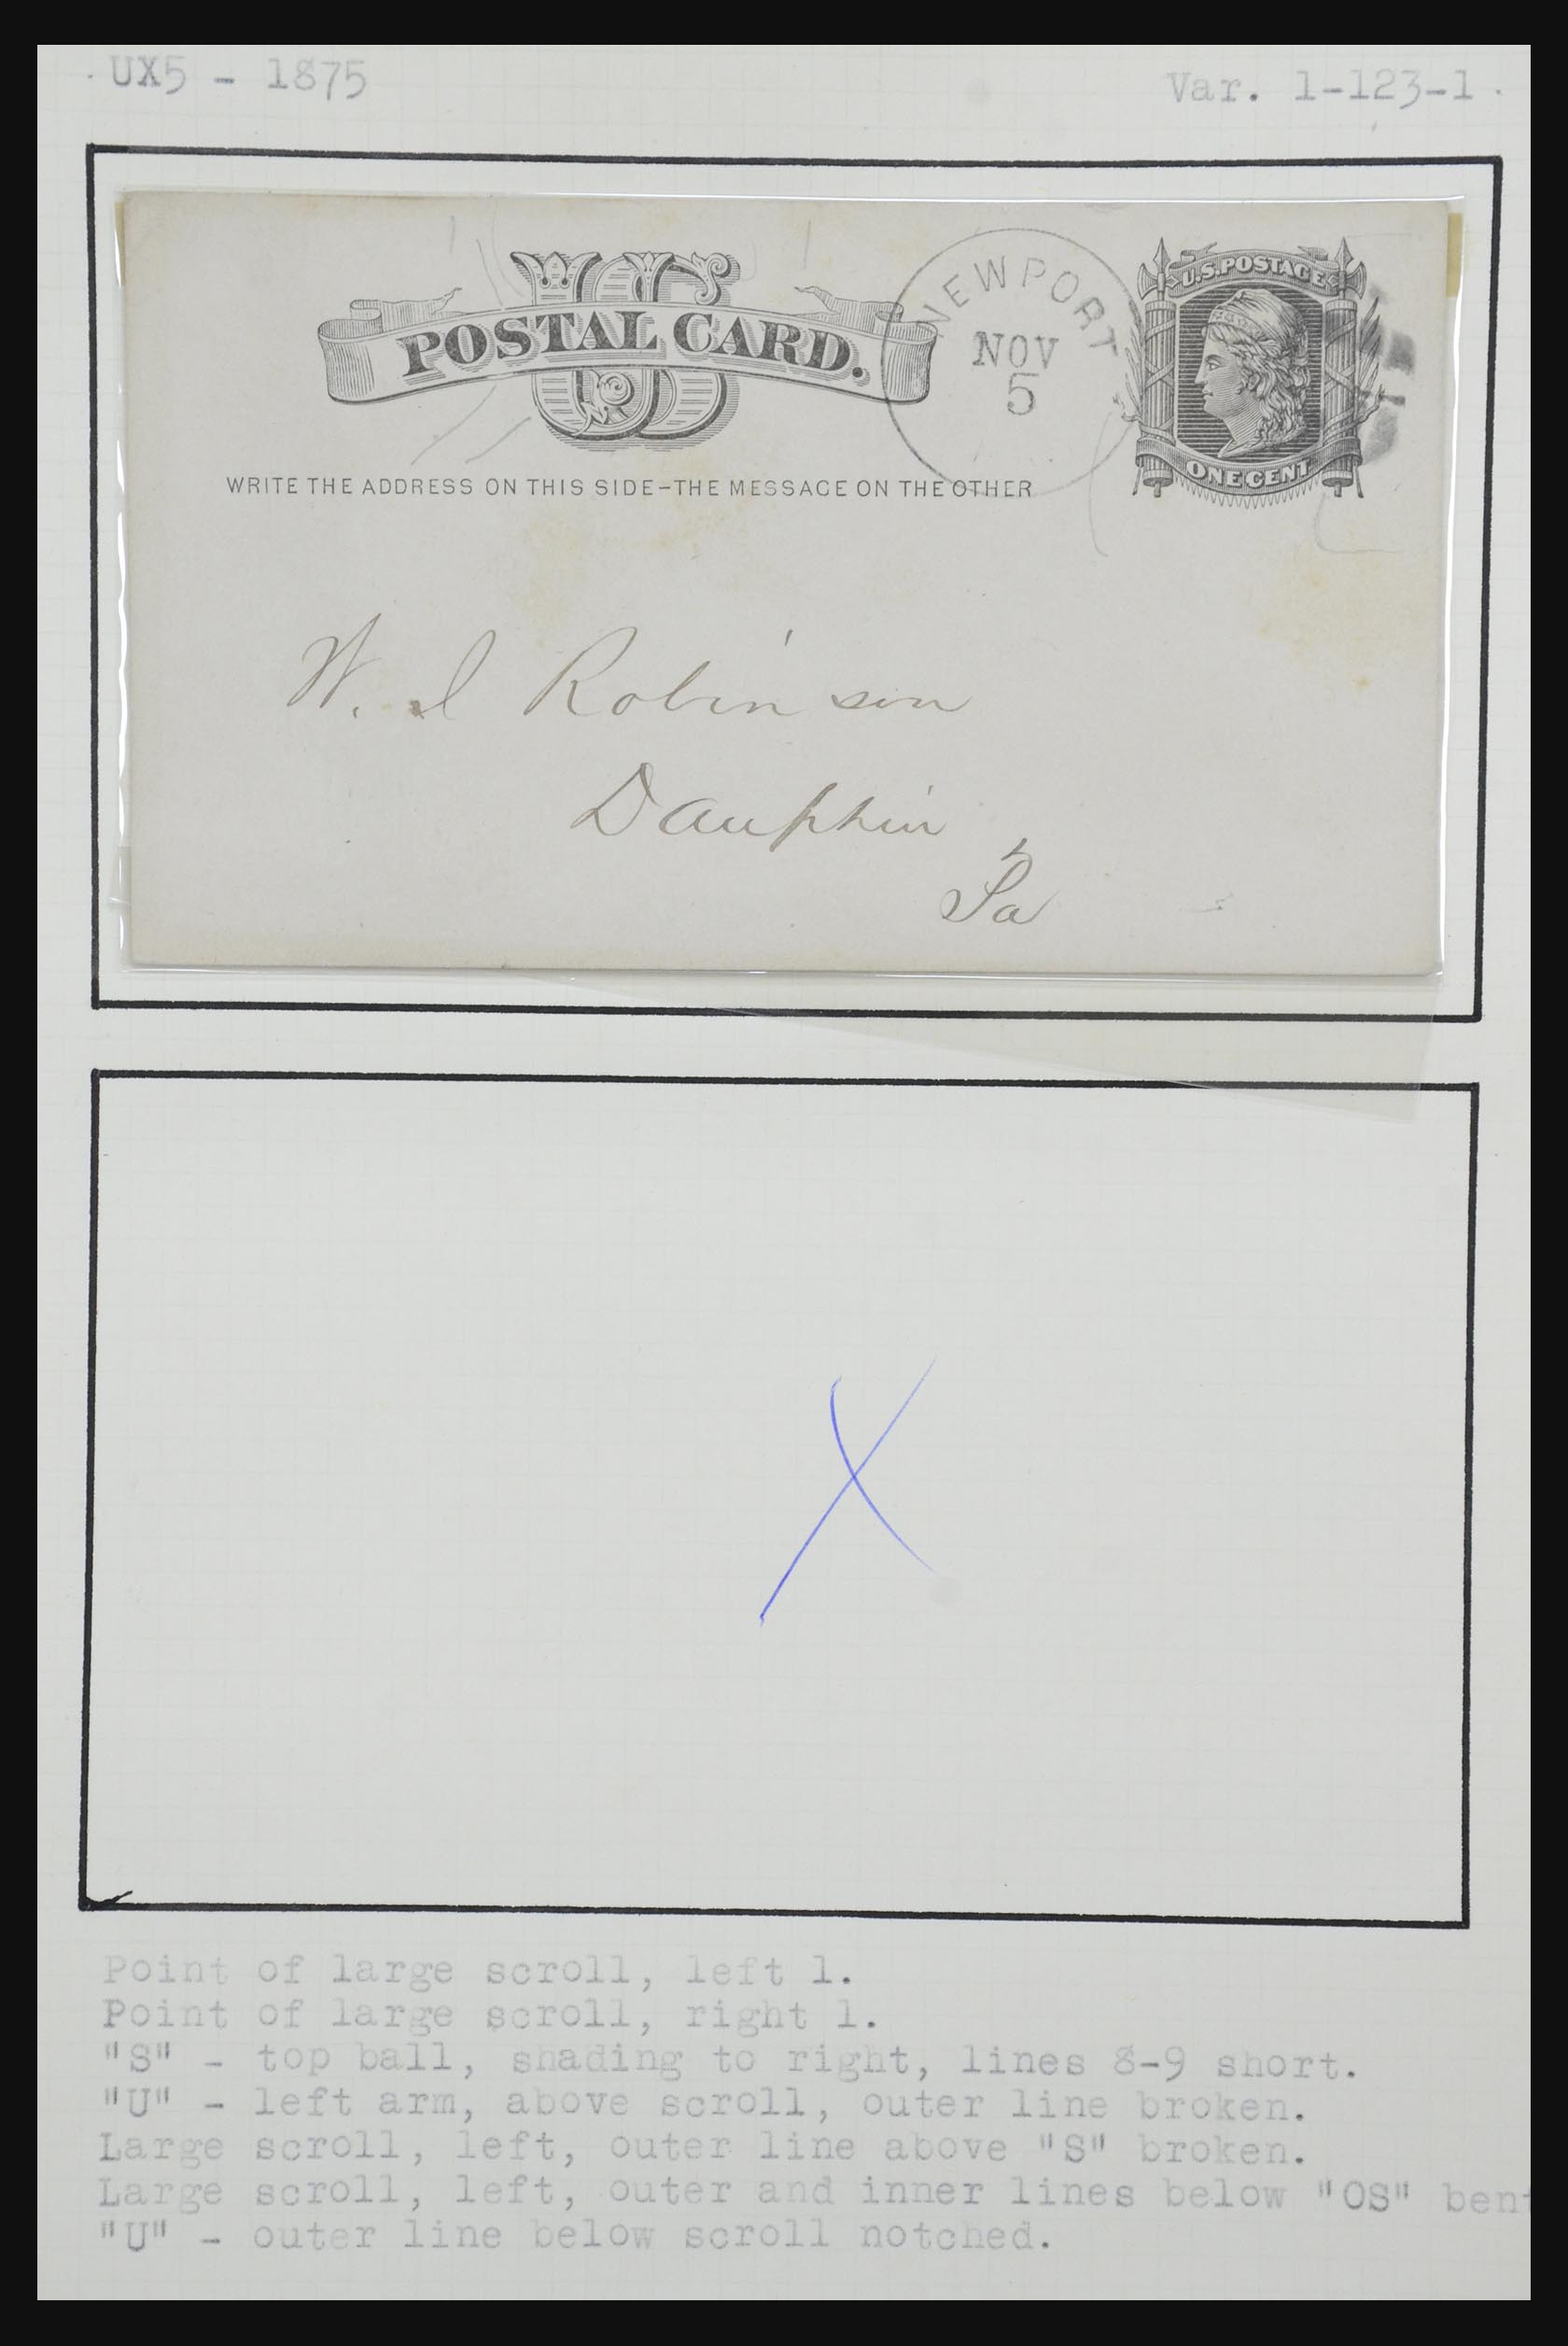 32209 088 - 32209 USA postal cards 1873-1950.